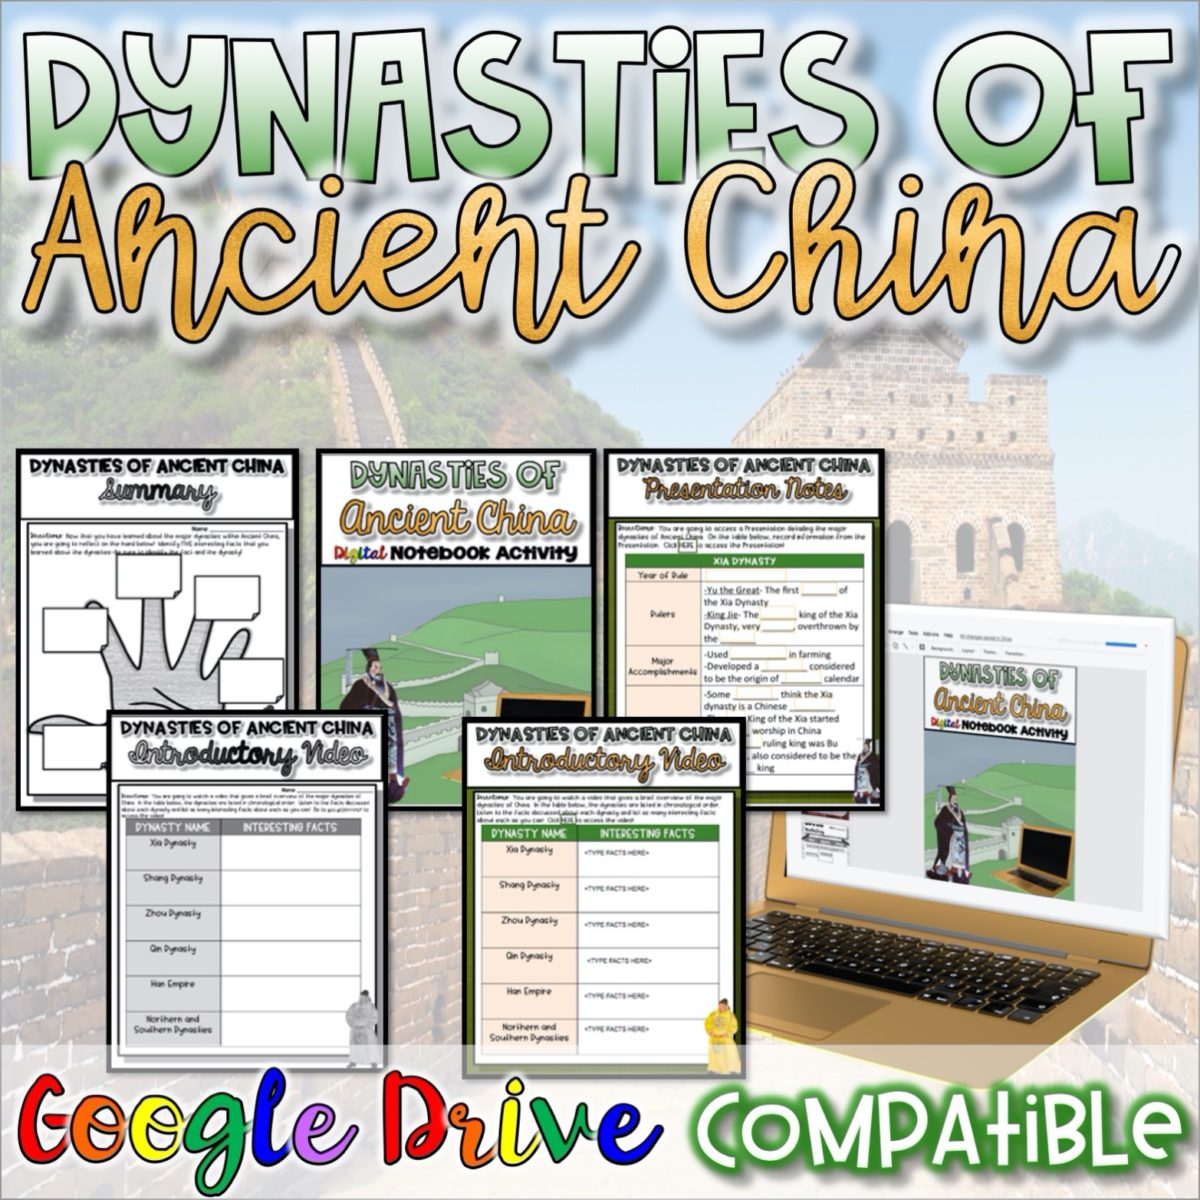 dynasties-of-China-ancient-civilizations